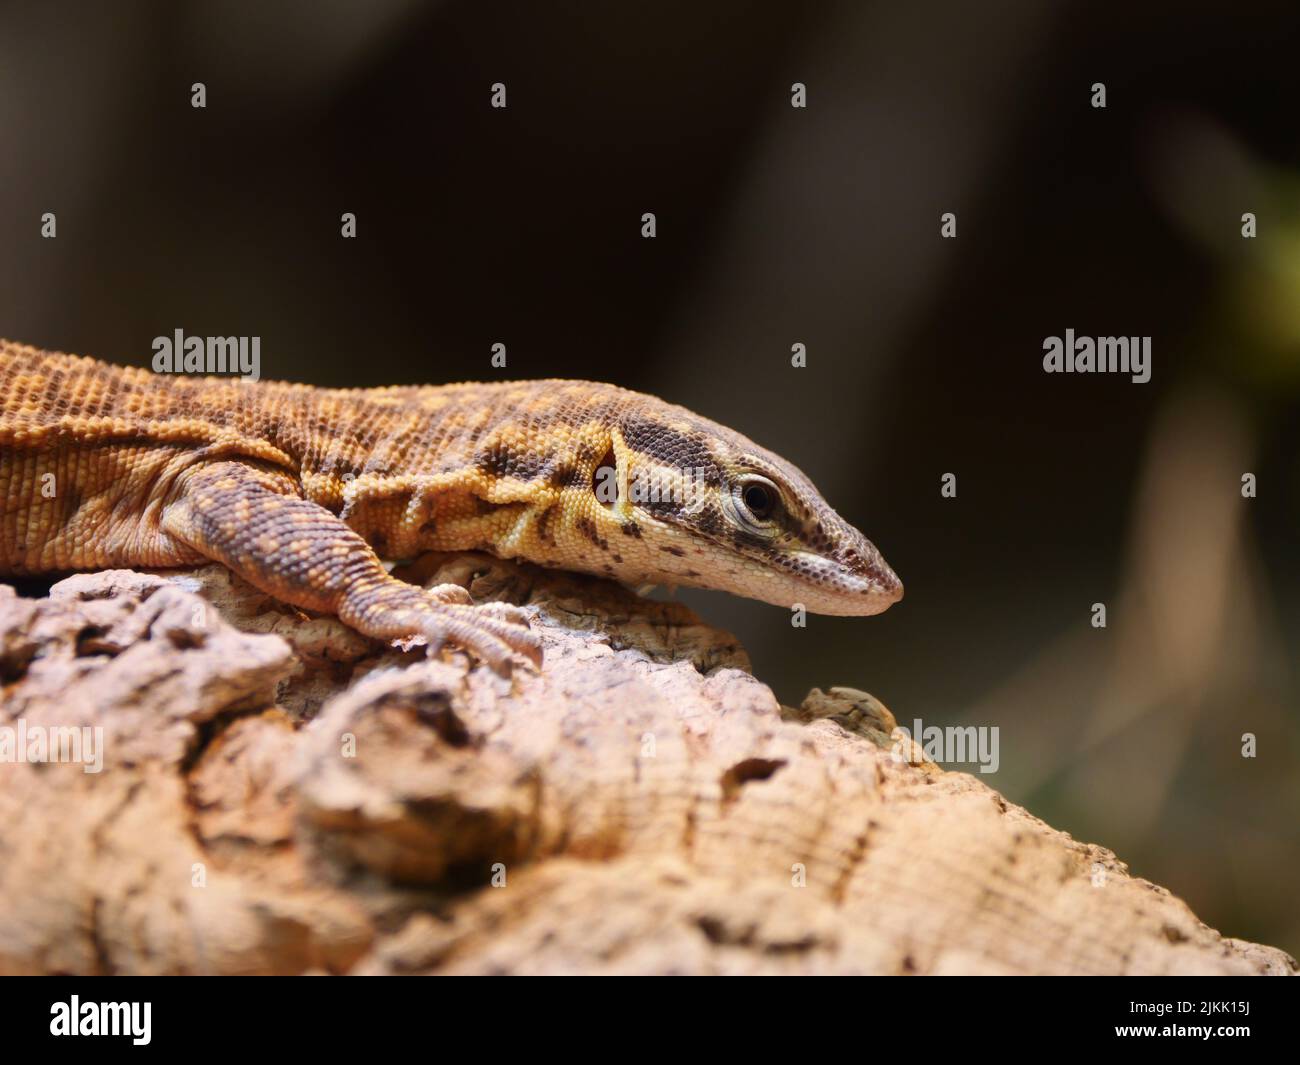 A closeup of a viviparous lizard on a wooden log Stock Photo